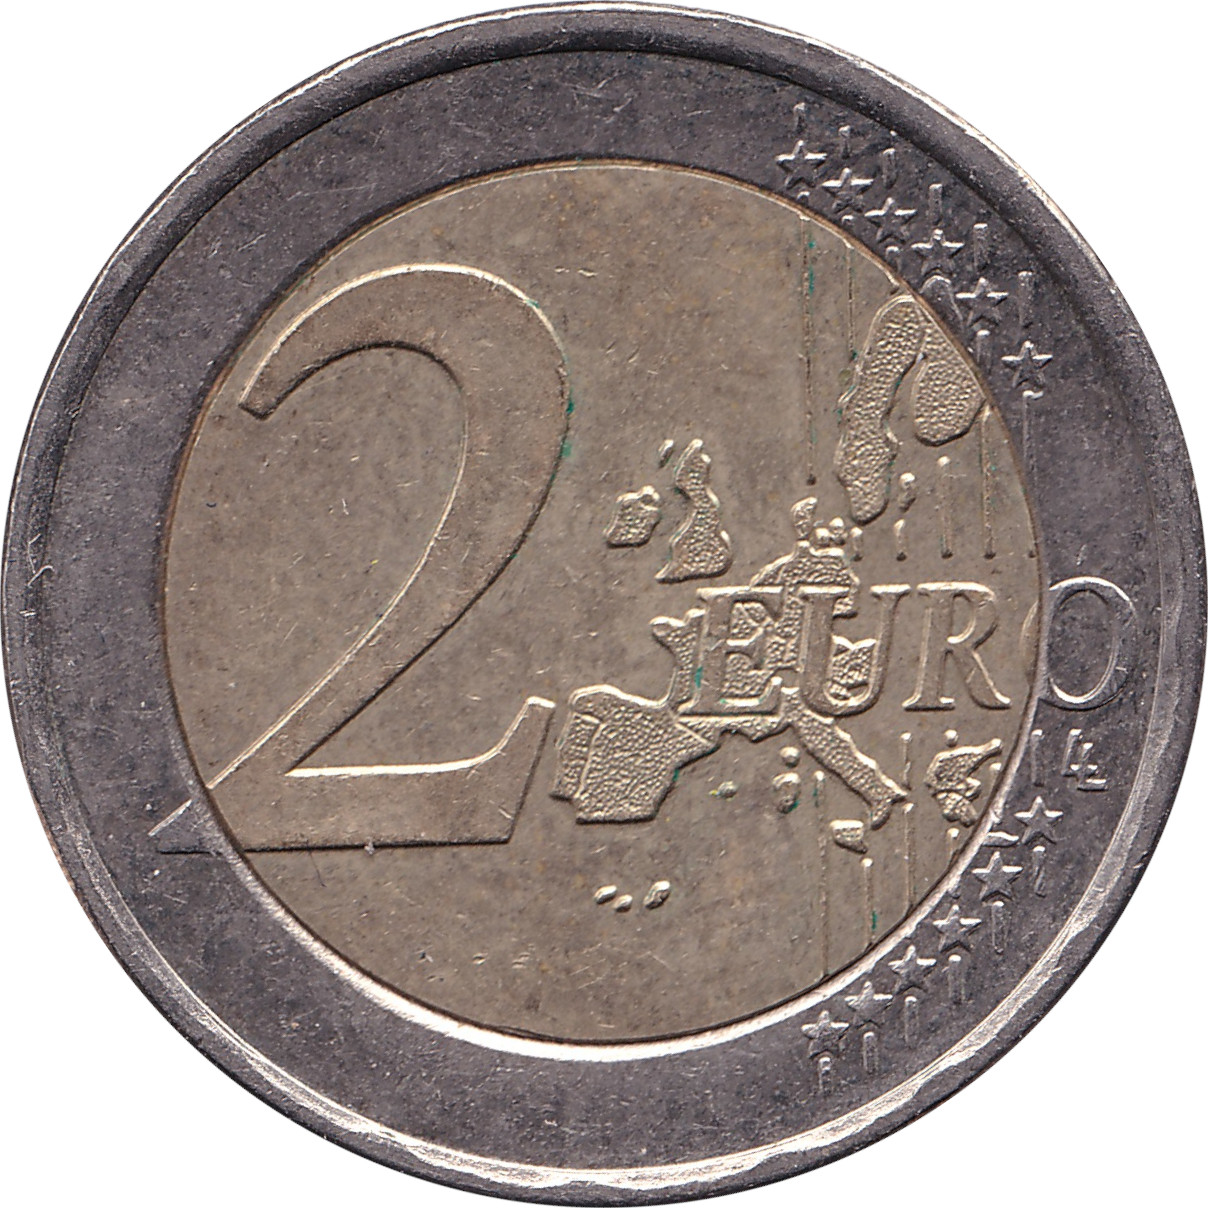 2 euro - Europe